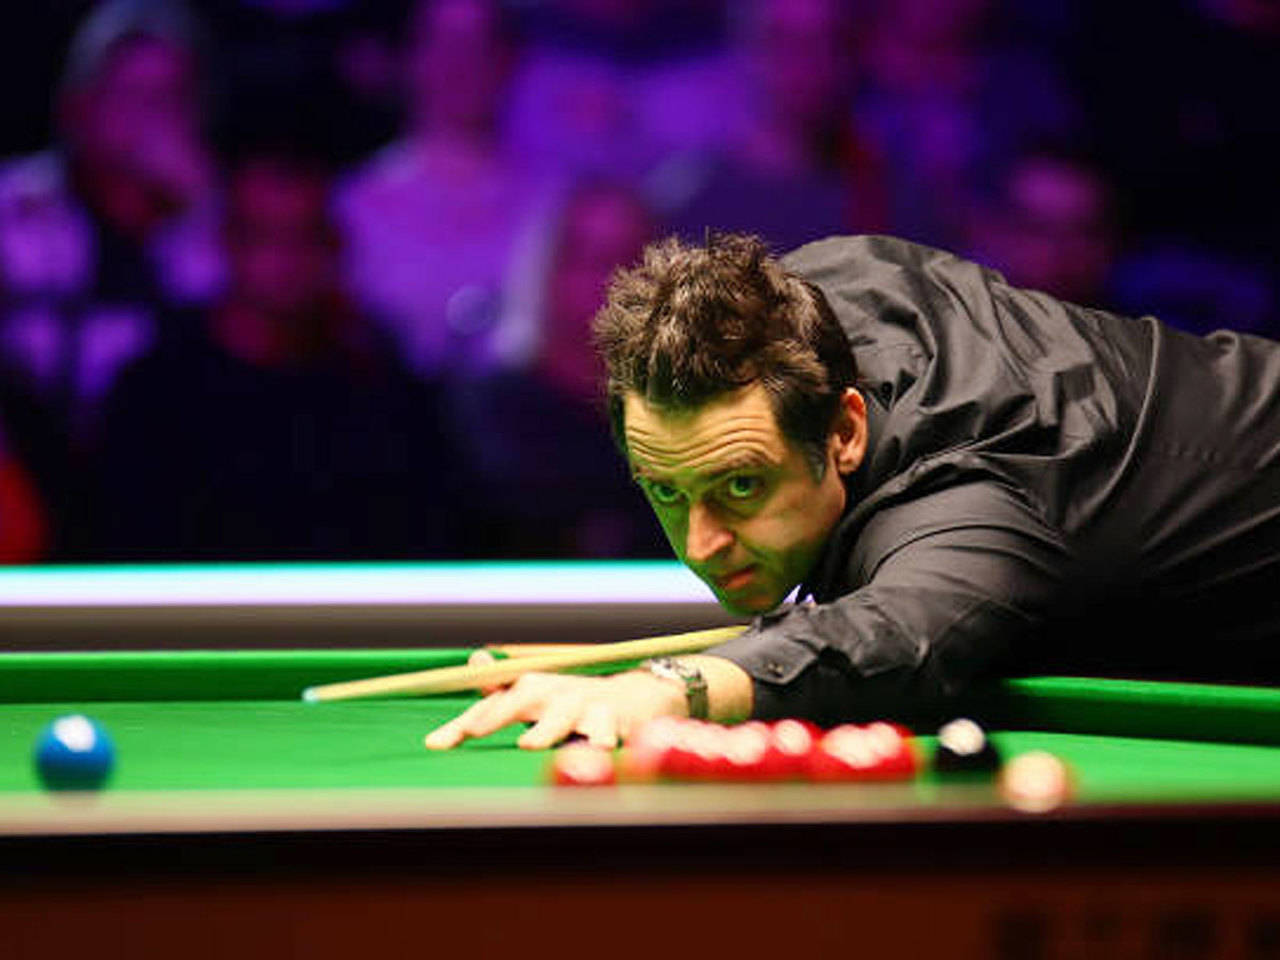 Sensational OSullivan, Higgins set 2020 World Snooker Championship ablaze More sports News